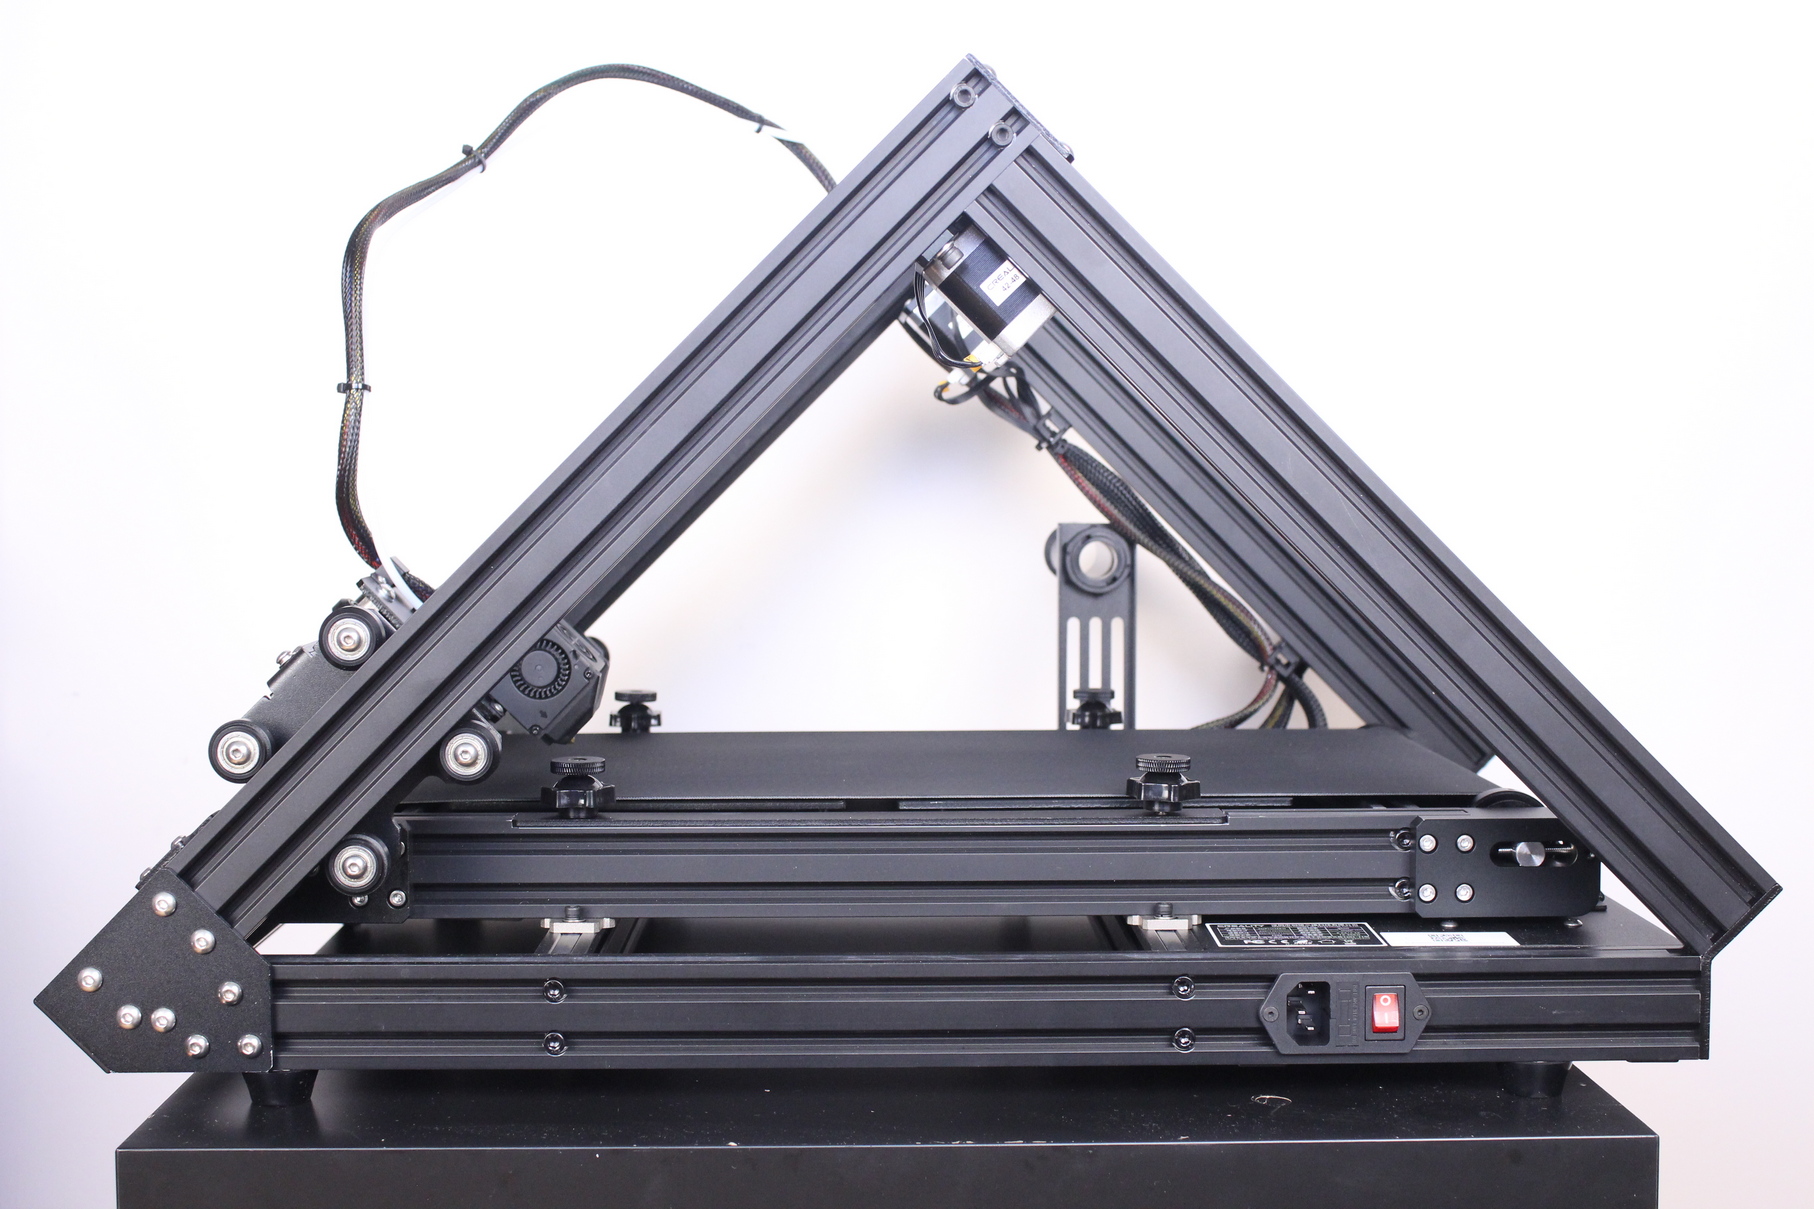 Creality CR 30 3DPrintMill Design 2 | Creality 3DPrintMill (CR-30) Review: Belt Printer for Batch 3D Printing